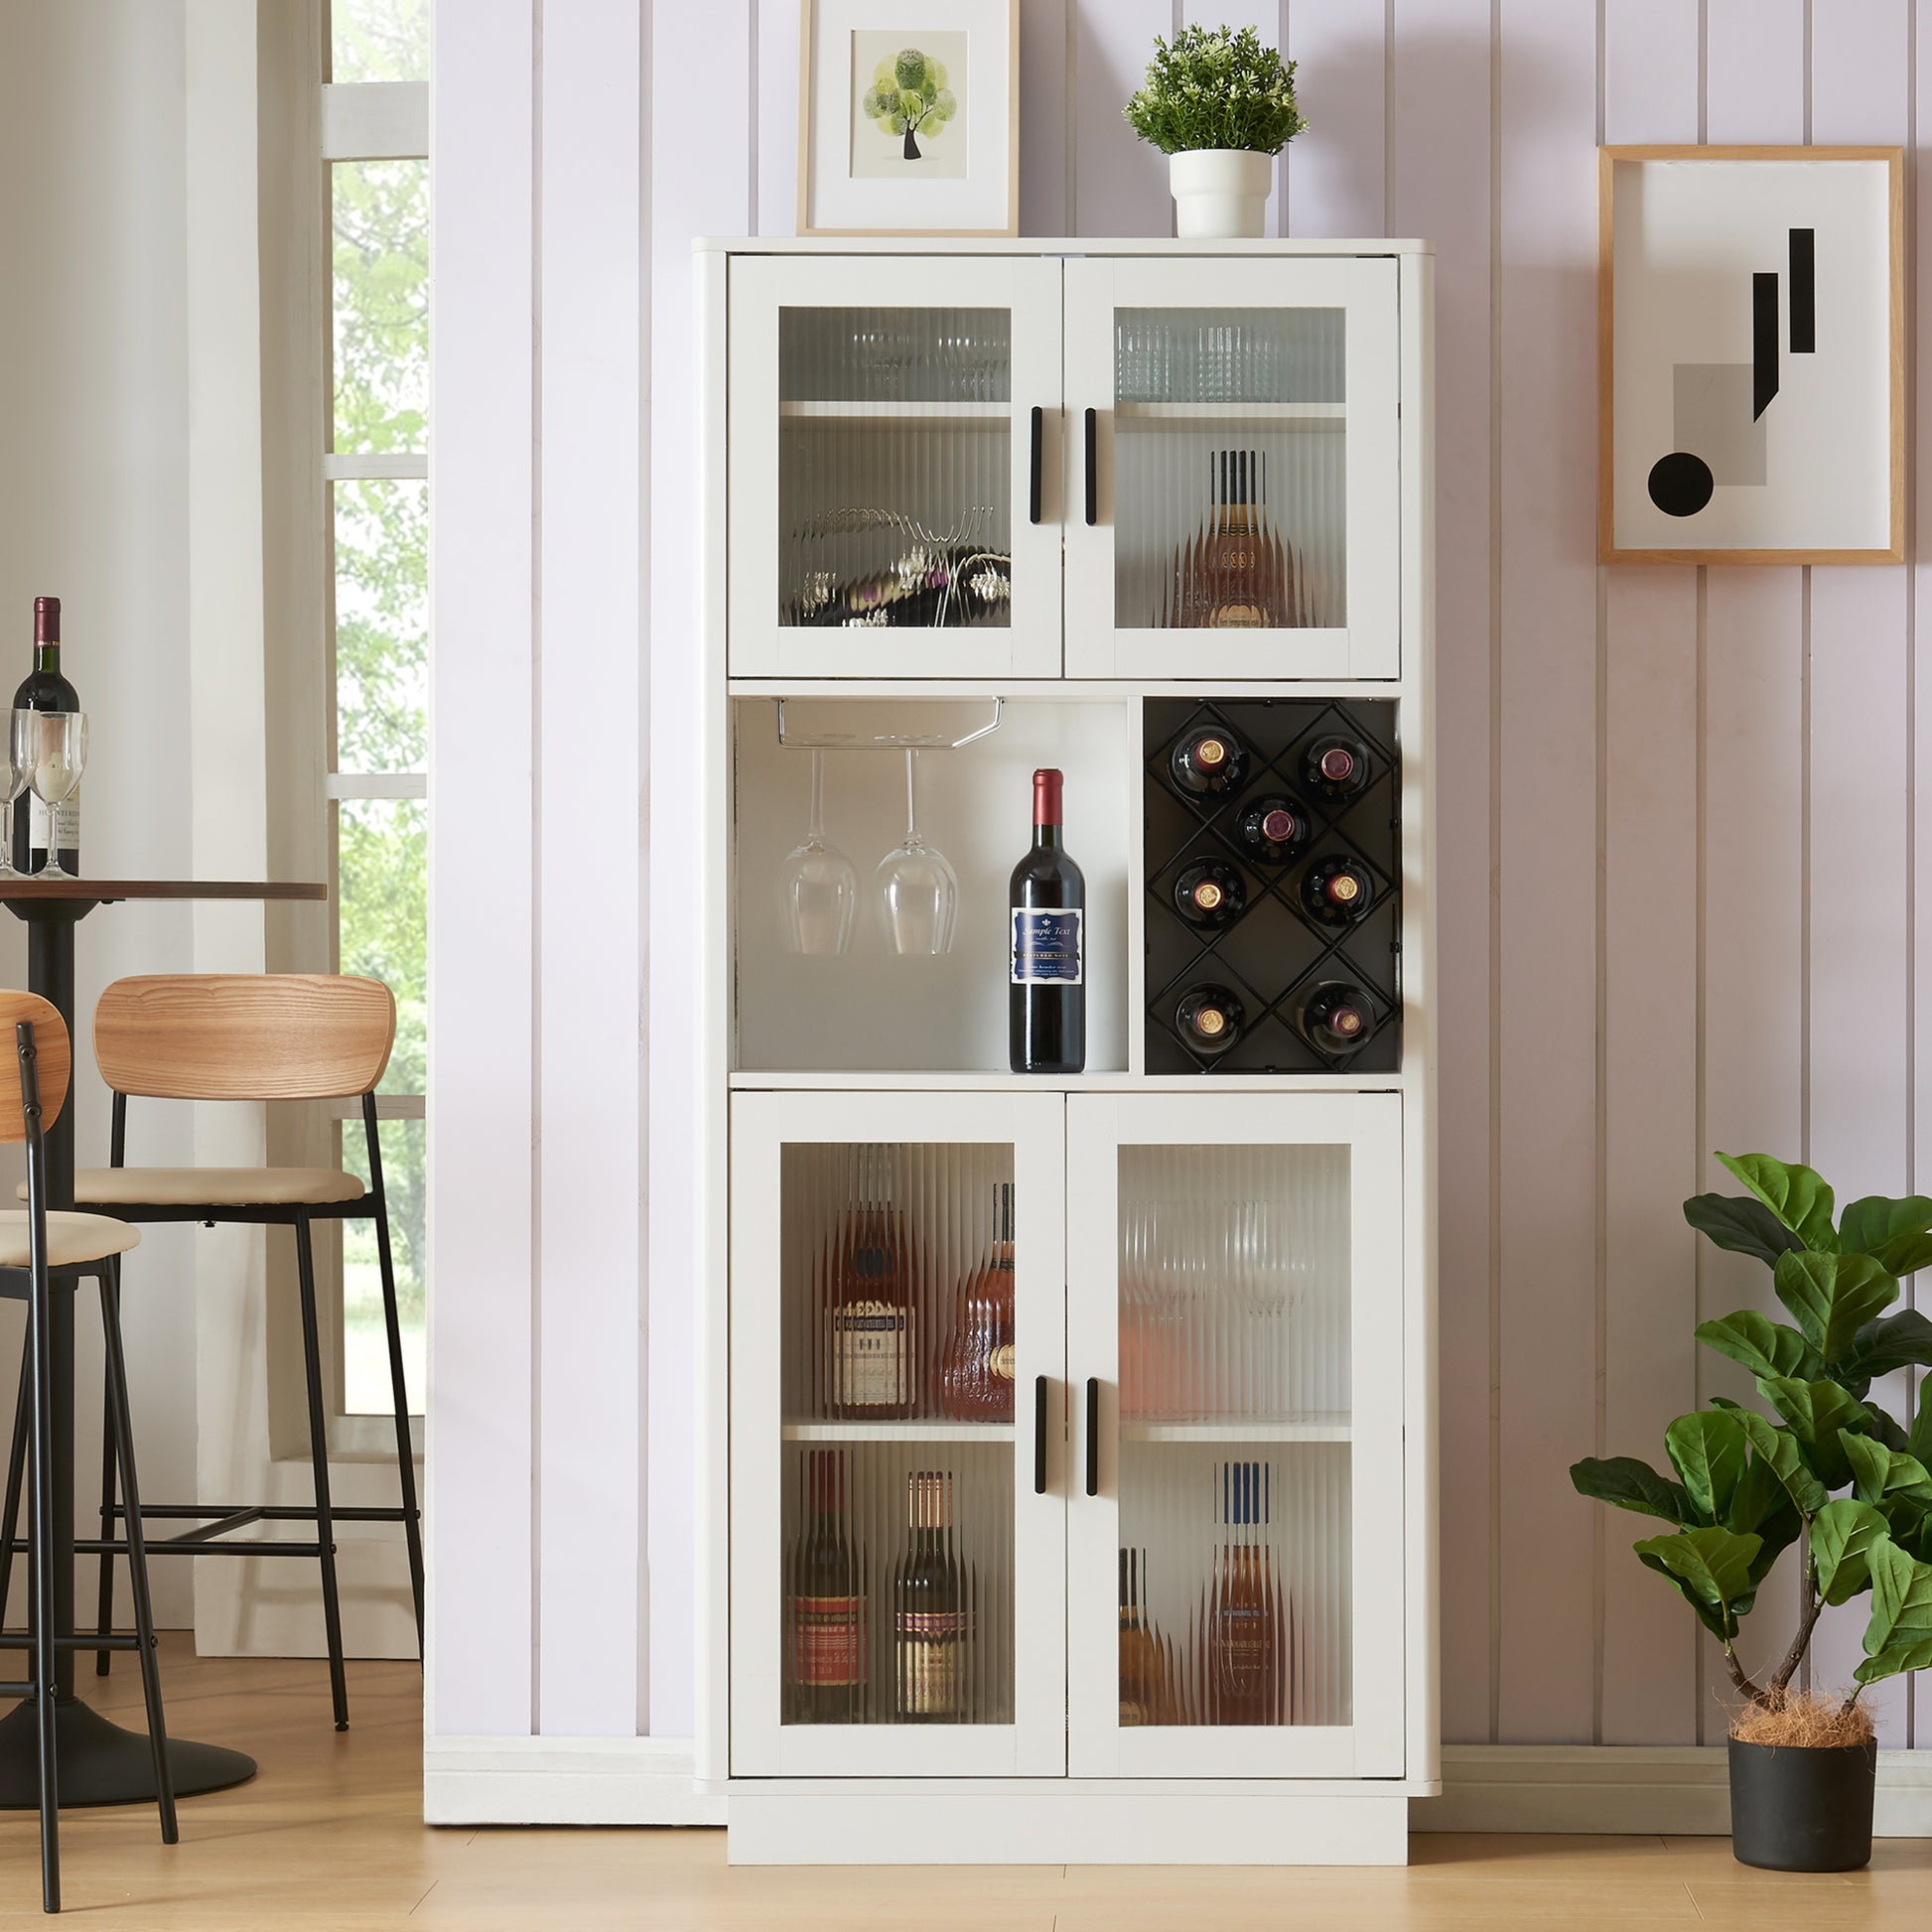 Led Wine Bar Cabinets with Wine Rack, Wine Bottle